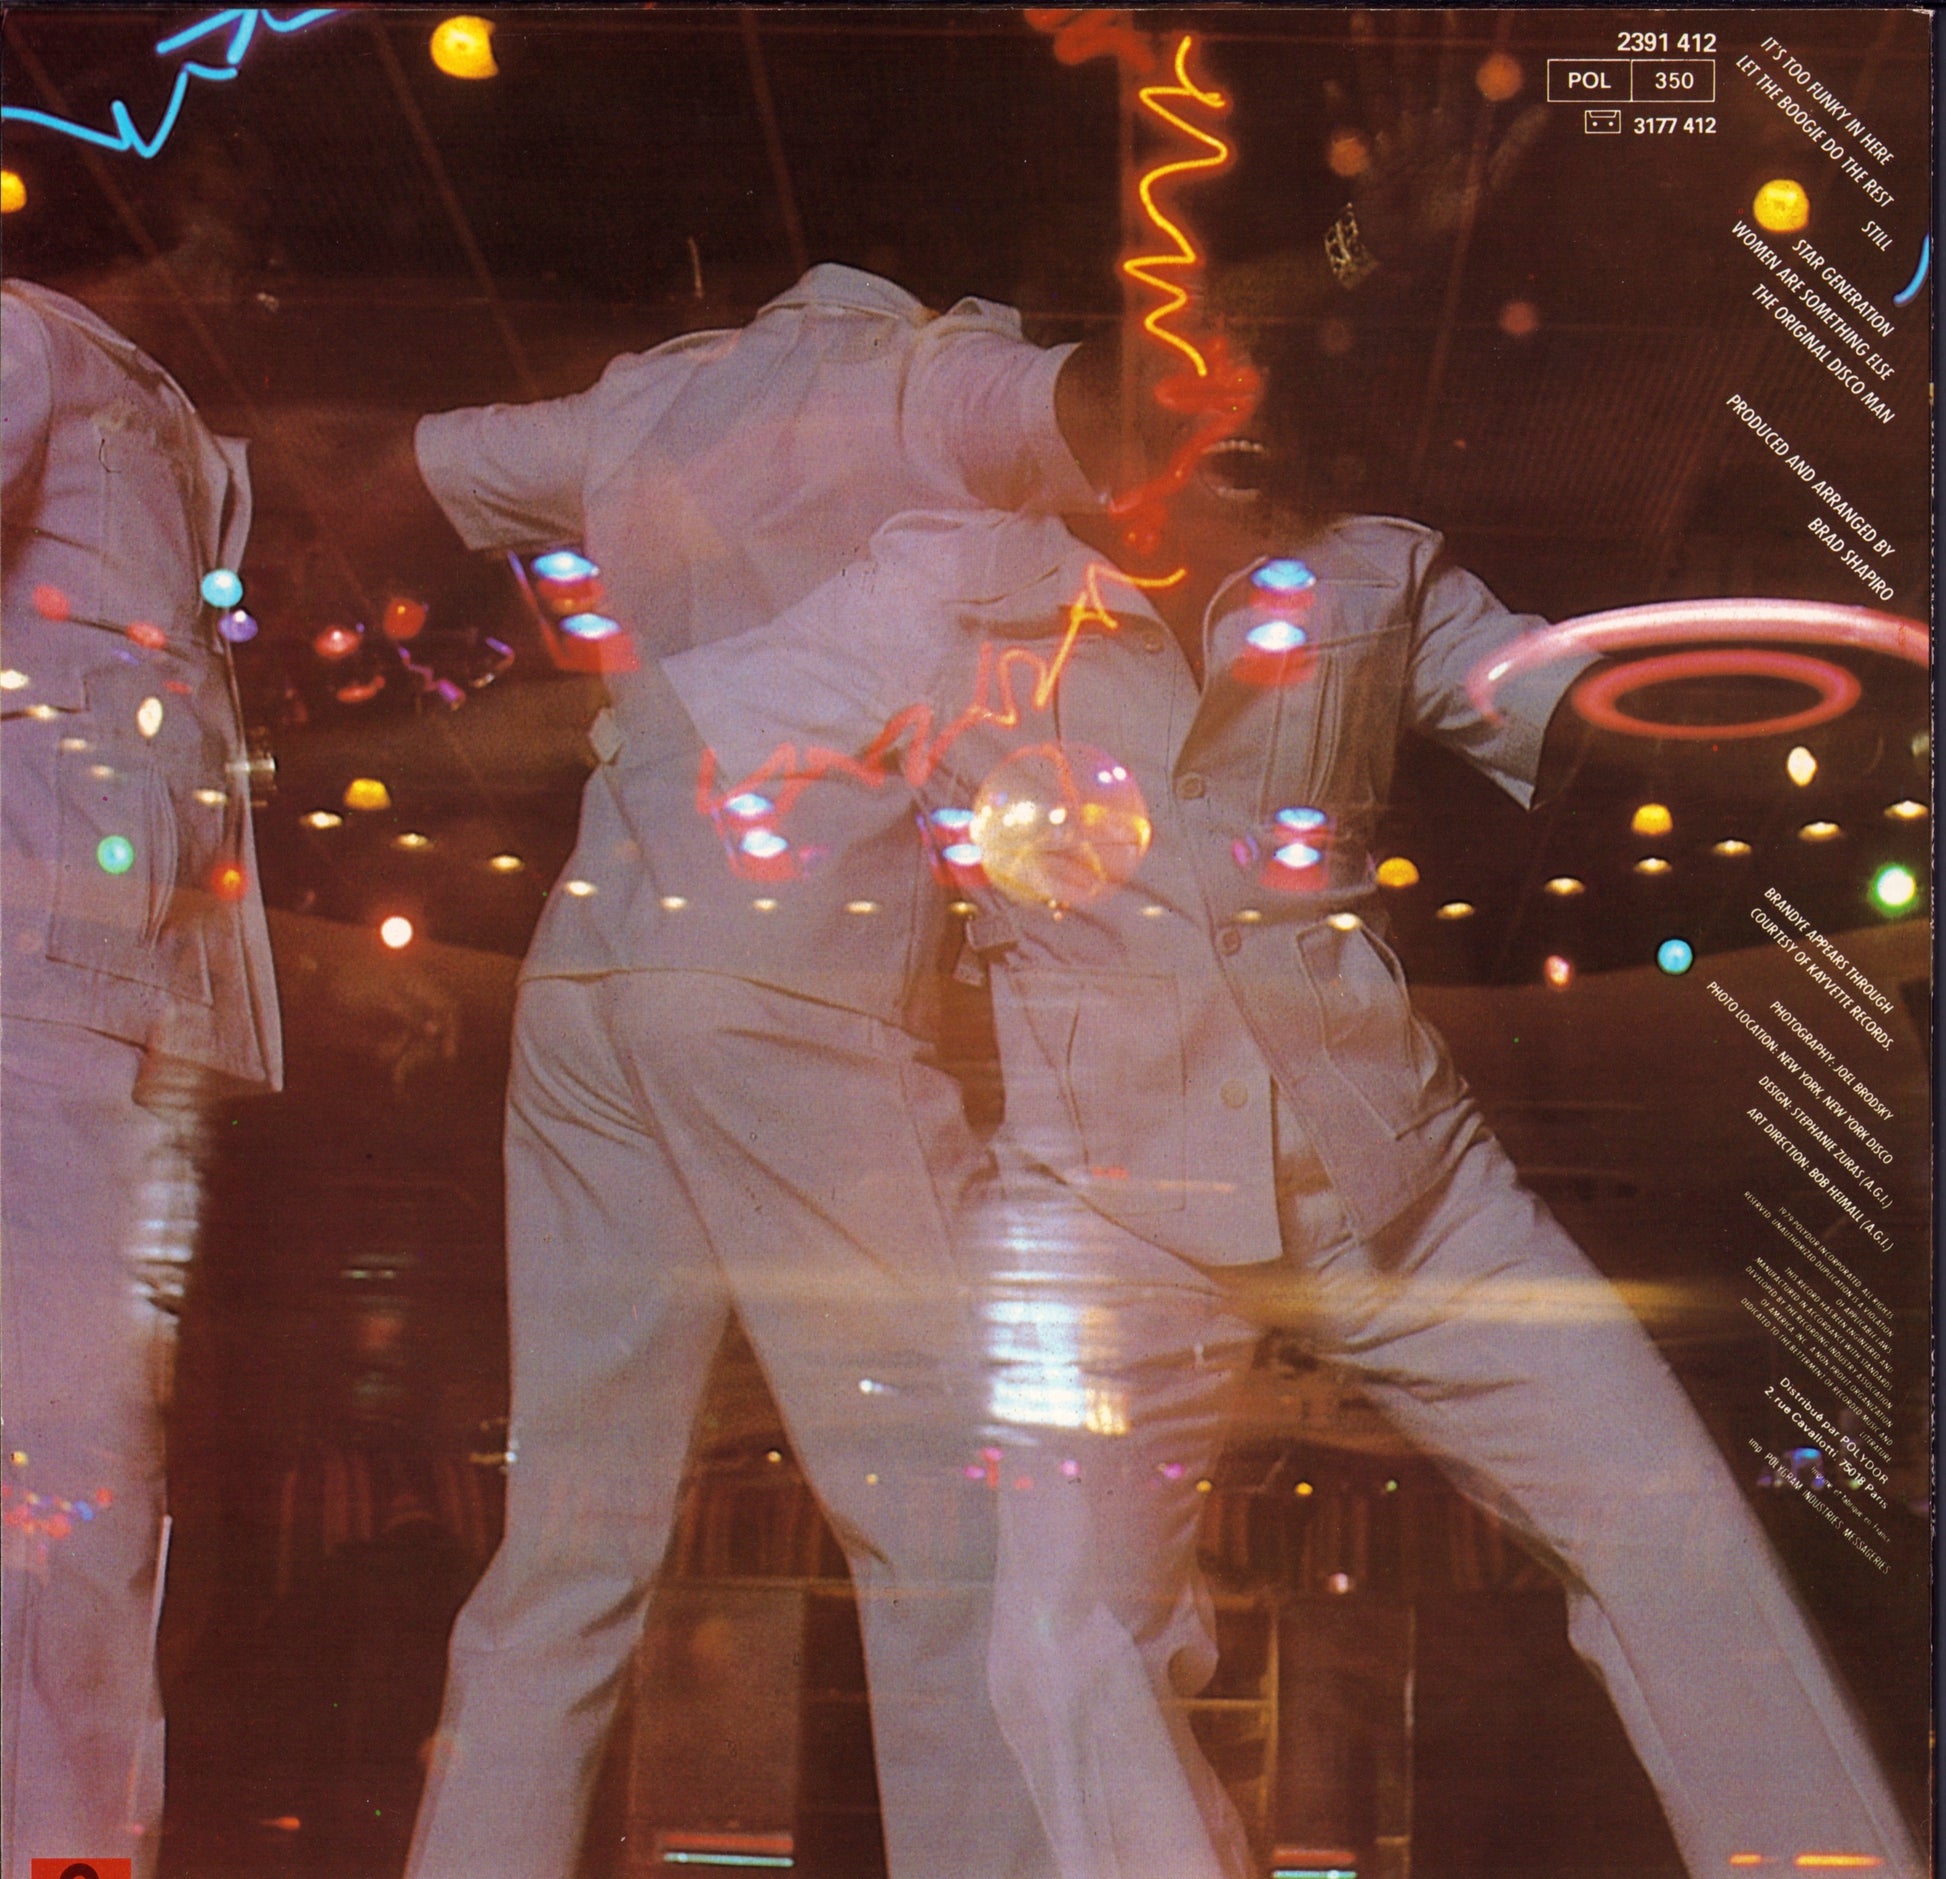 James Brown - The Original Disco Man Vinyl LP FR